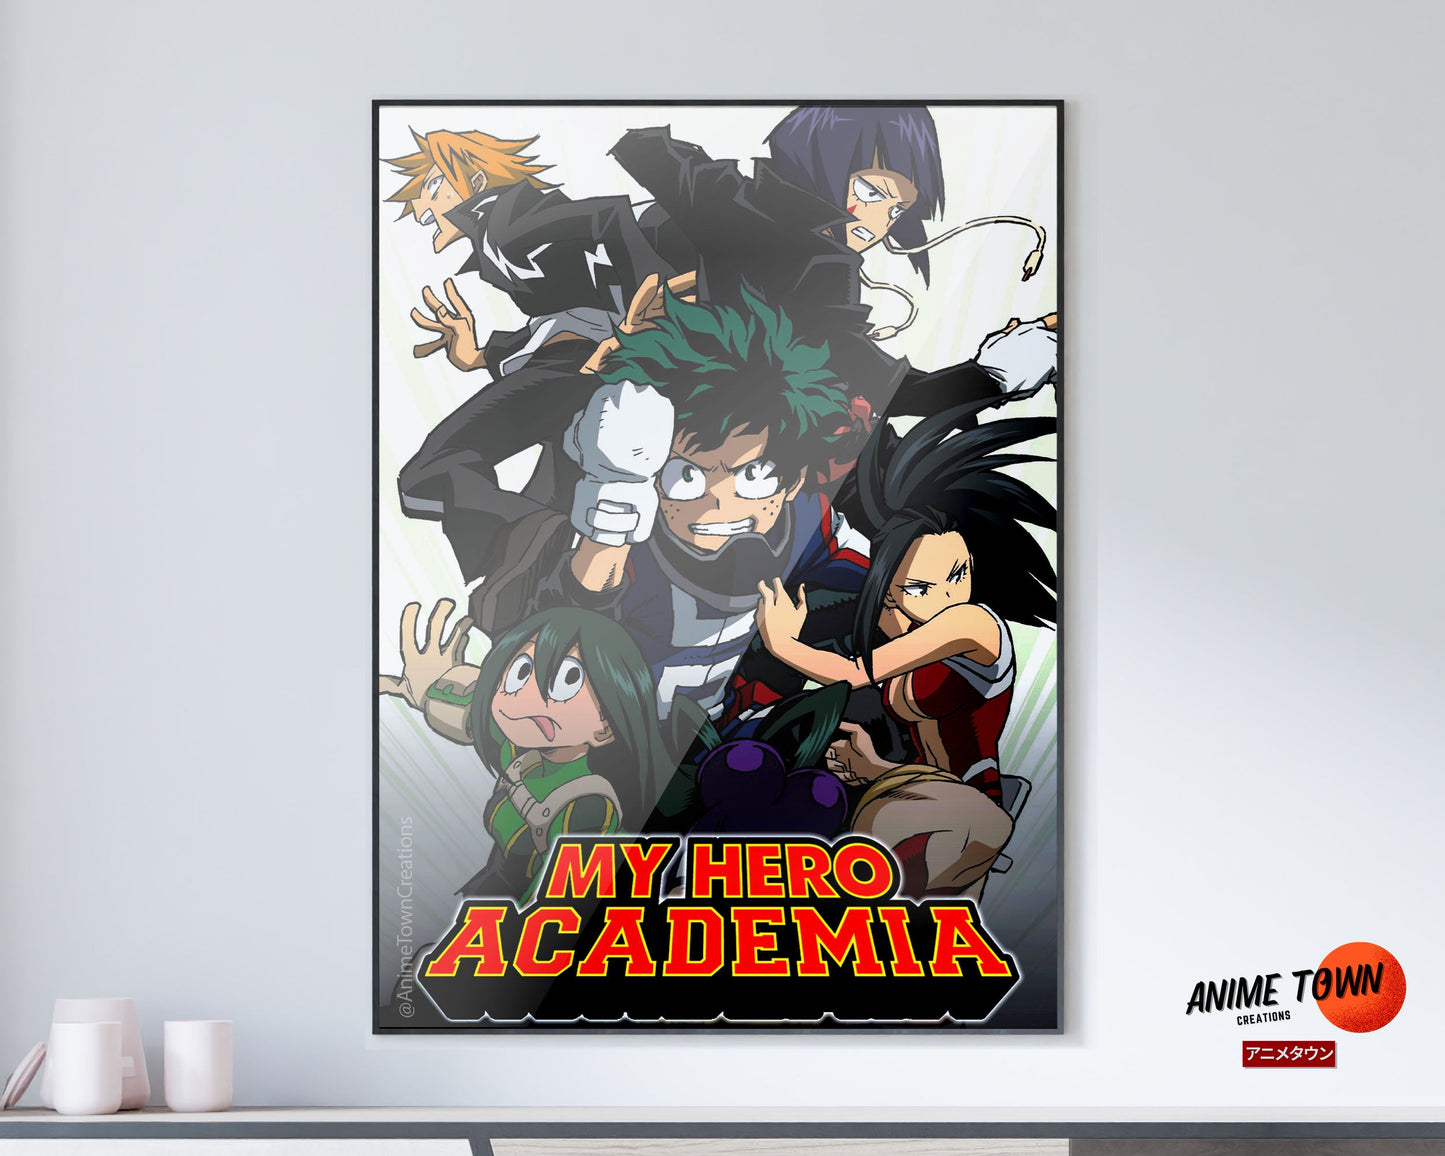 Anime Town Creations Poster My Hero Academia Cover 5" x 7" Home Goods - Anime My Hero Academia Poster